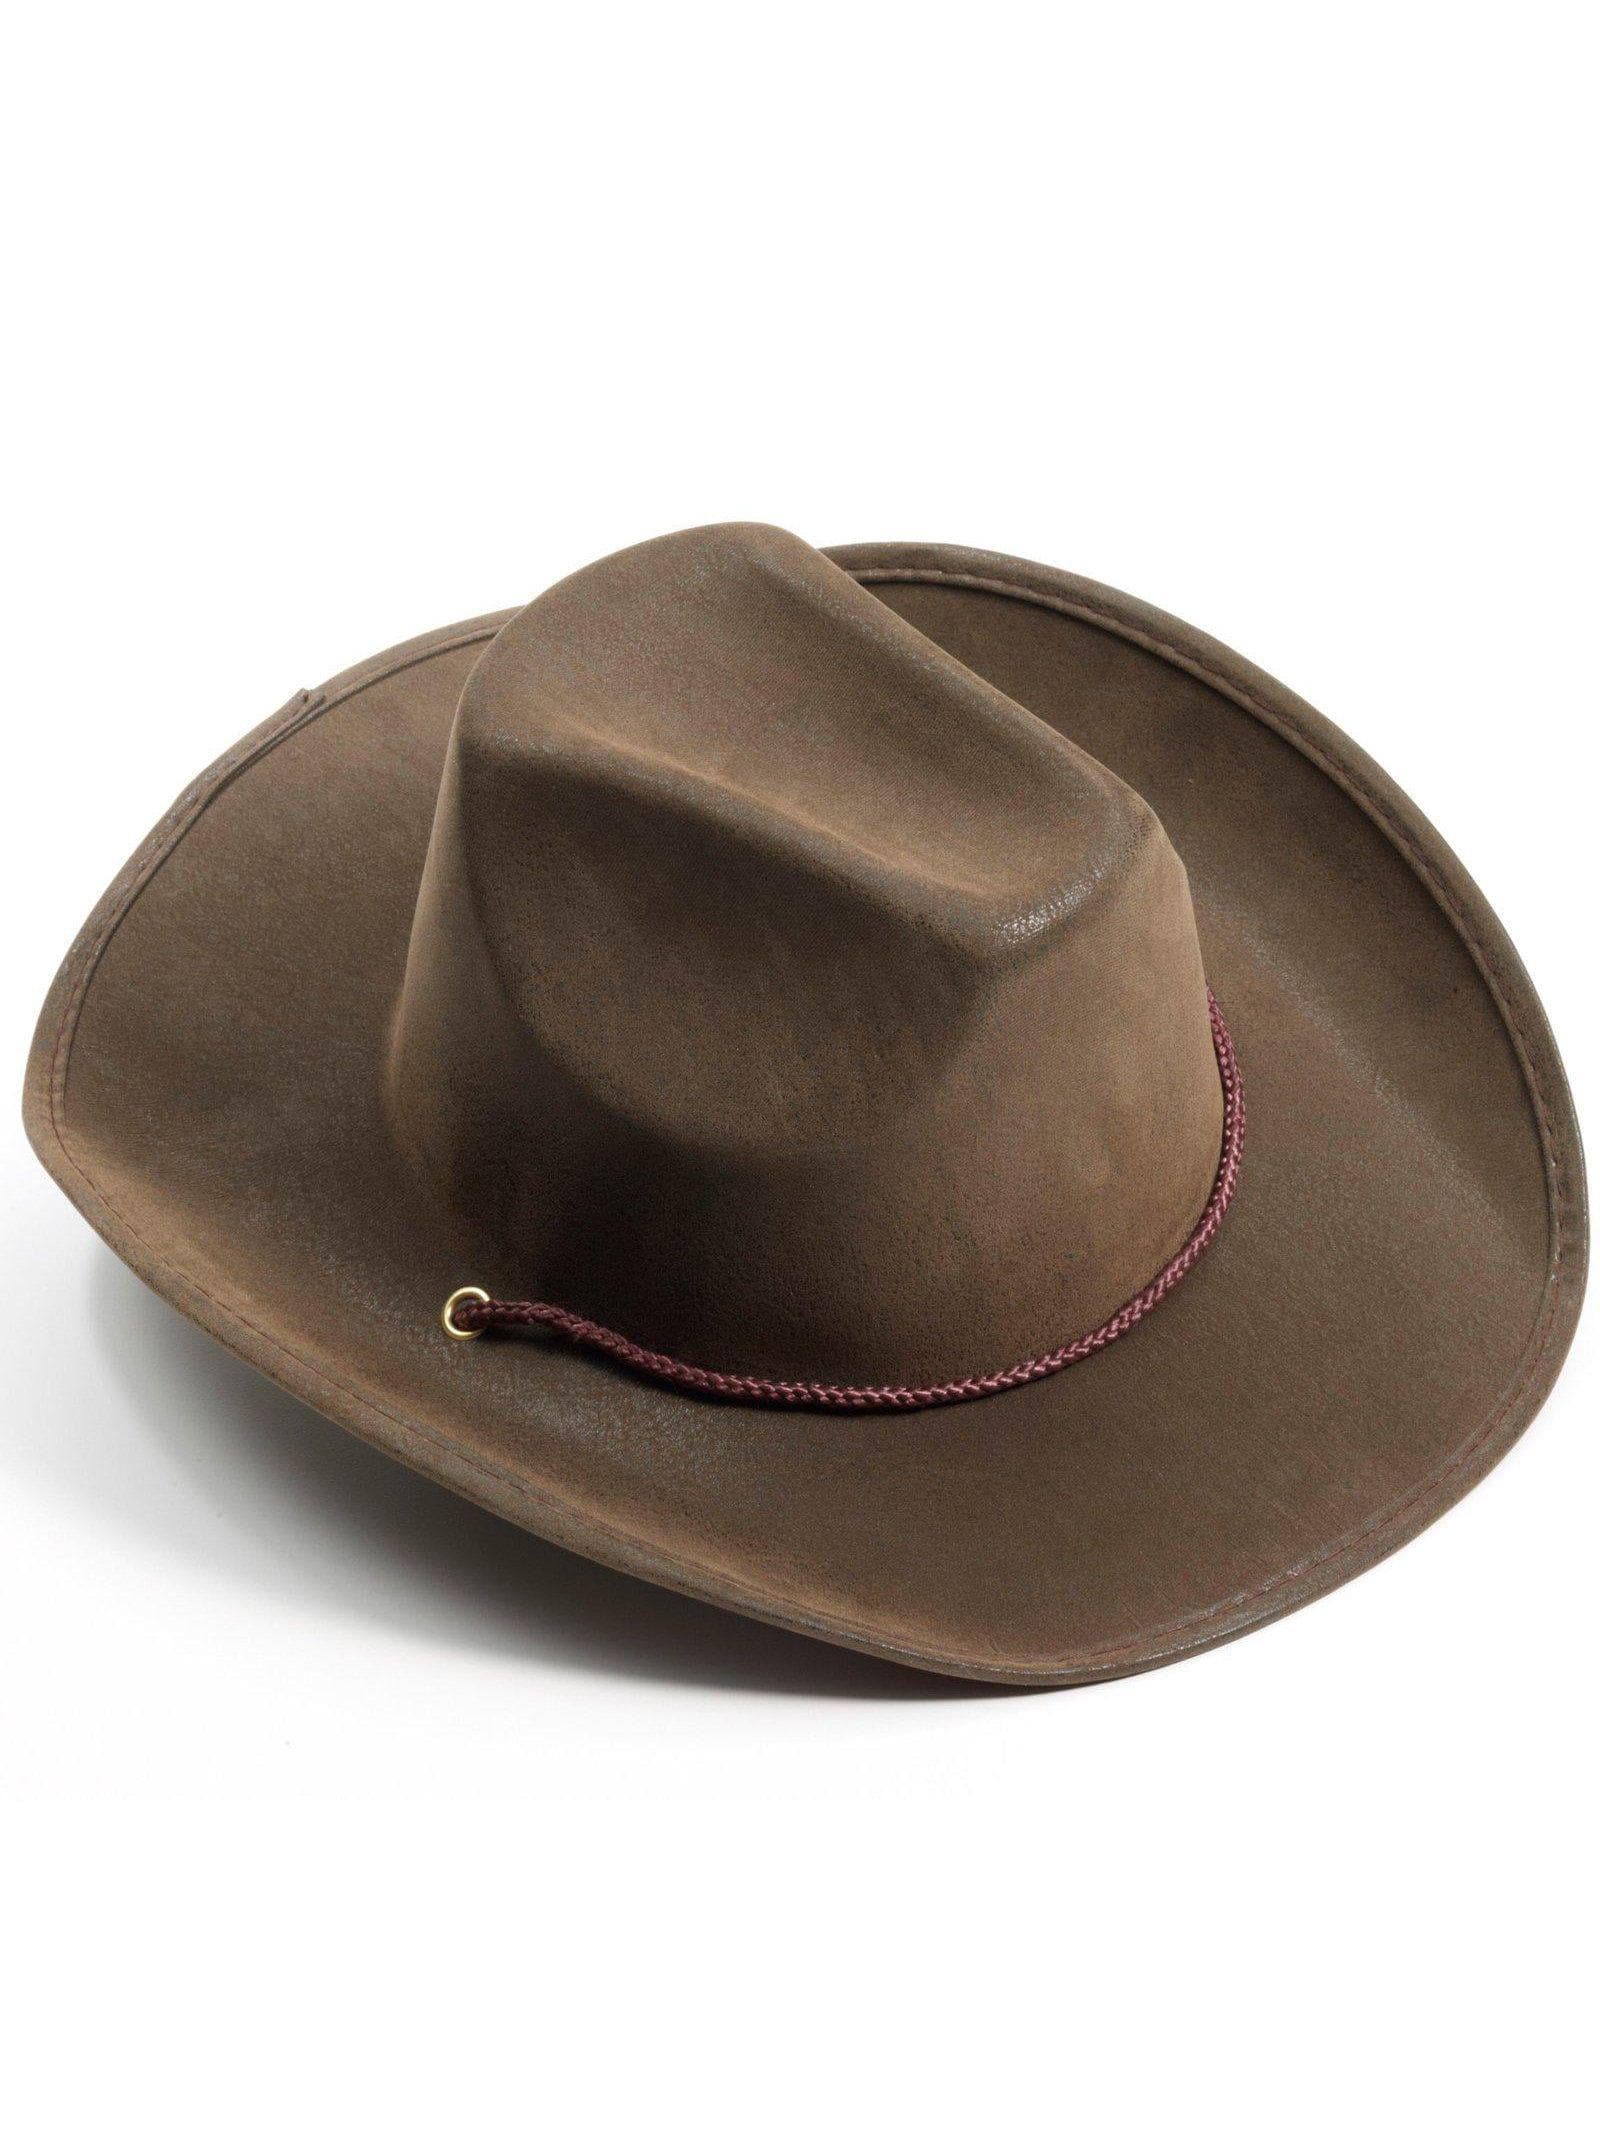 Adult Brown Suede Cowboy Hat - costumes.com